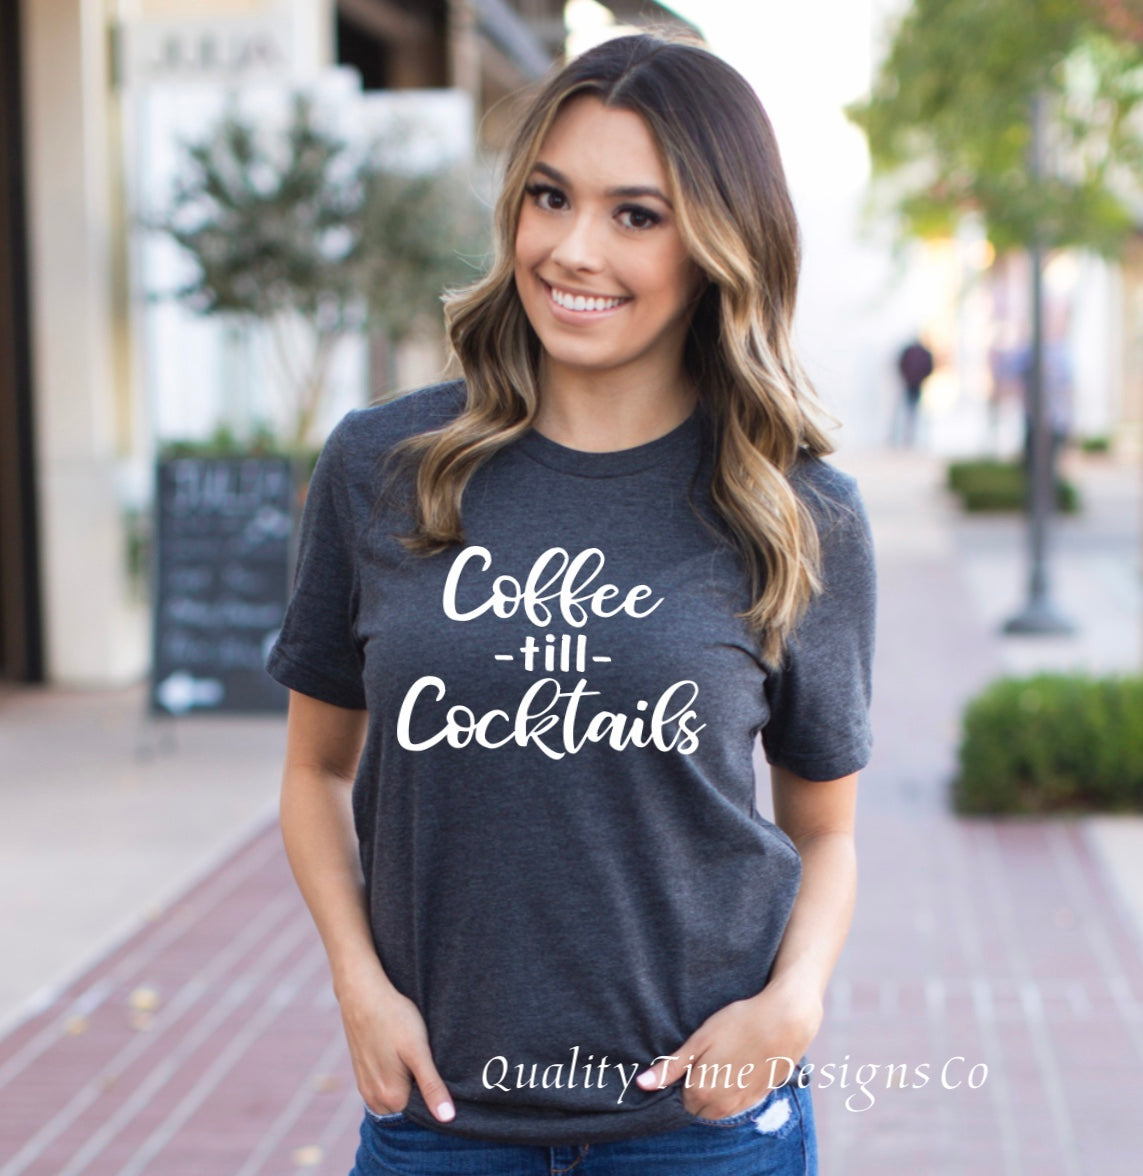 Coffee till cocktails t shirt